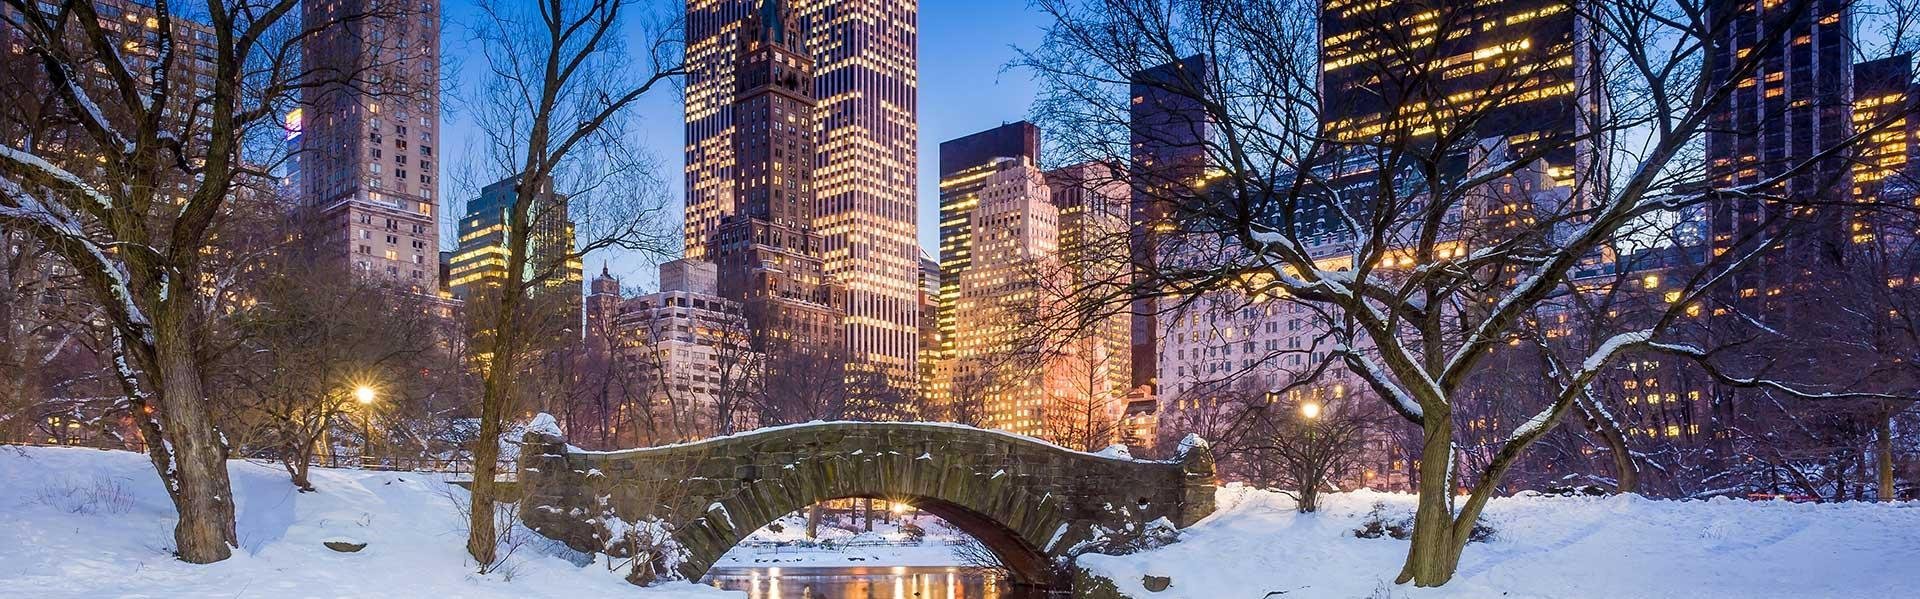 Sneeuw in Central Park, New York, Amerika